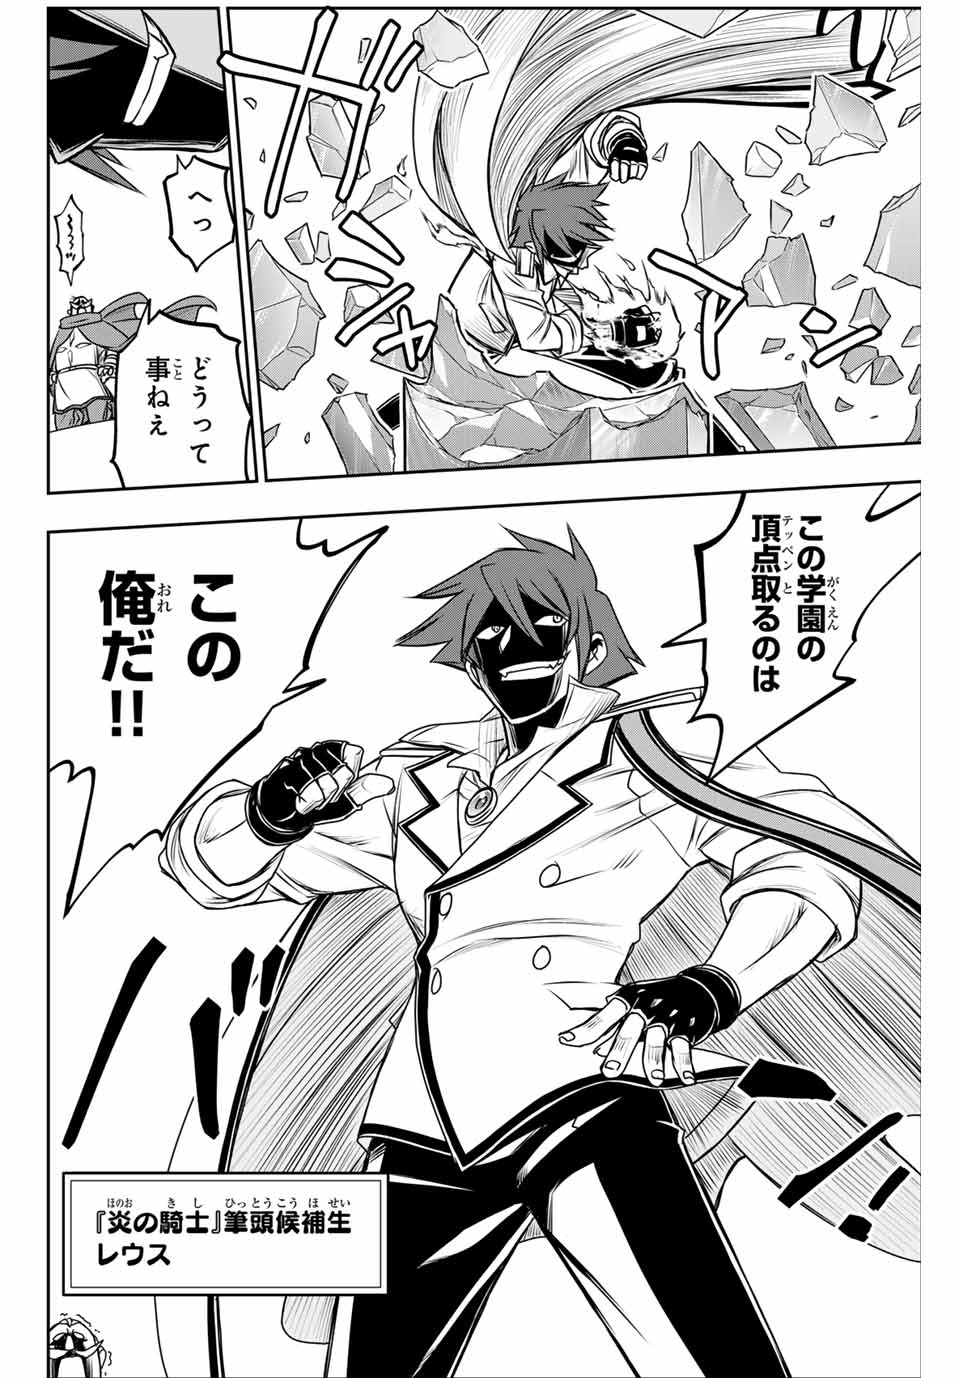 Nengan no Akuyaku Reijou (Last Boss) no Karada wo Teniiretazo!  - Chapter 23.5 - Page 8